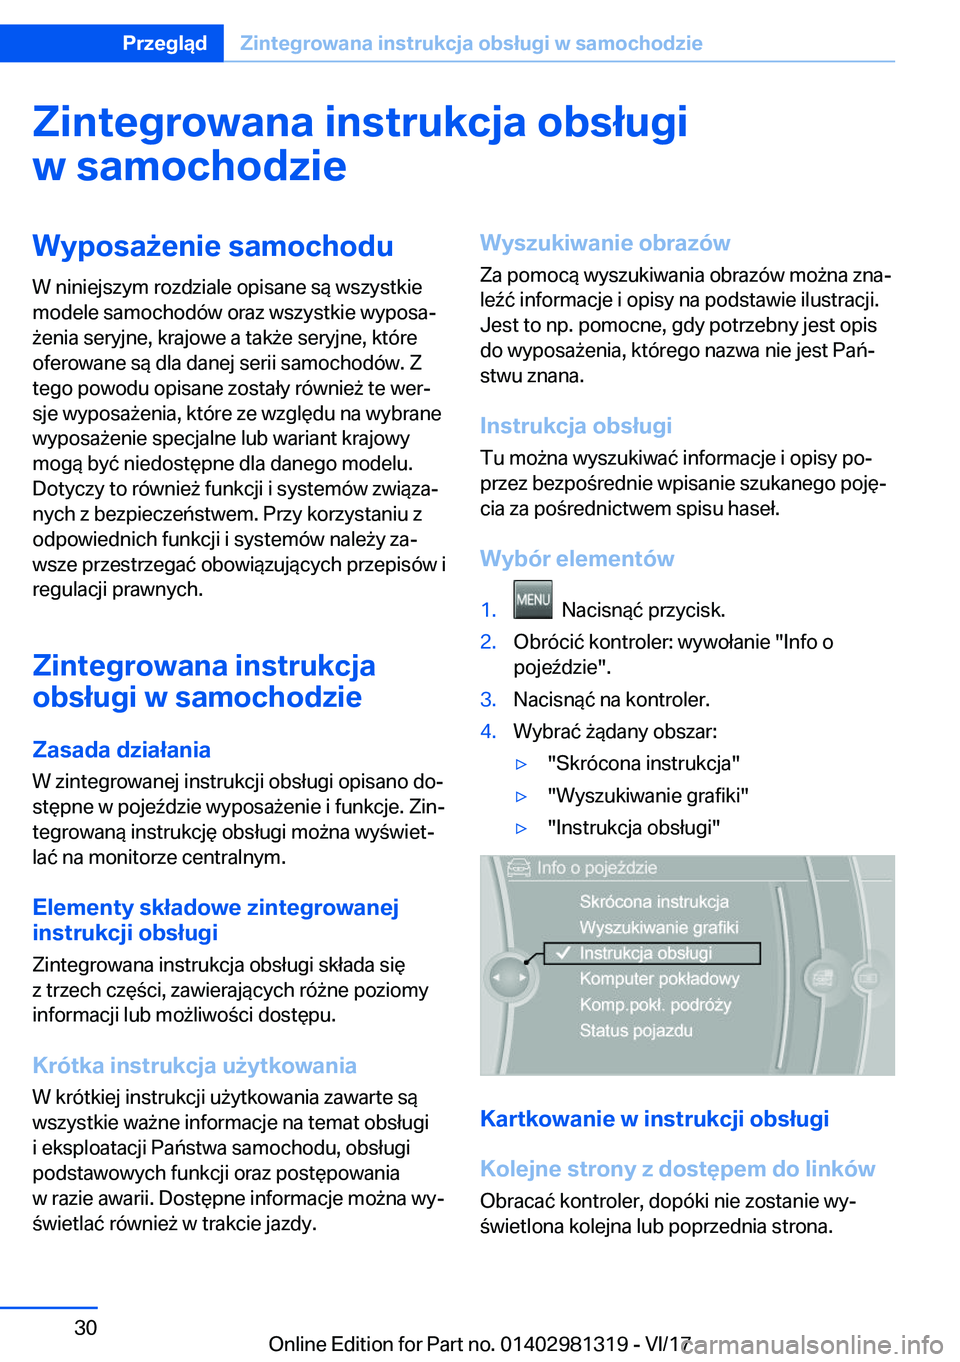 BMW X4 2018  Instrukcja obsługi (in Polish) �Z�i�n�t�e�g�r�o�w�a�n�a��i�n�s�t�r�u�k�c�j�a��o�b�s�ł�u�g�i�w��s�a�m�o�c�h�o�d�z�i�e�W�y�p�o�s�a9�e�n�i�e��s�a�m�o�c�h�o�d�u
�W� �n�i�n�i�e�j�s�z�y�m� �r�o�z�d�z�i�a�l�e� �o�p�i�s�a�n�e� �s�